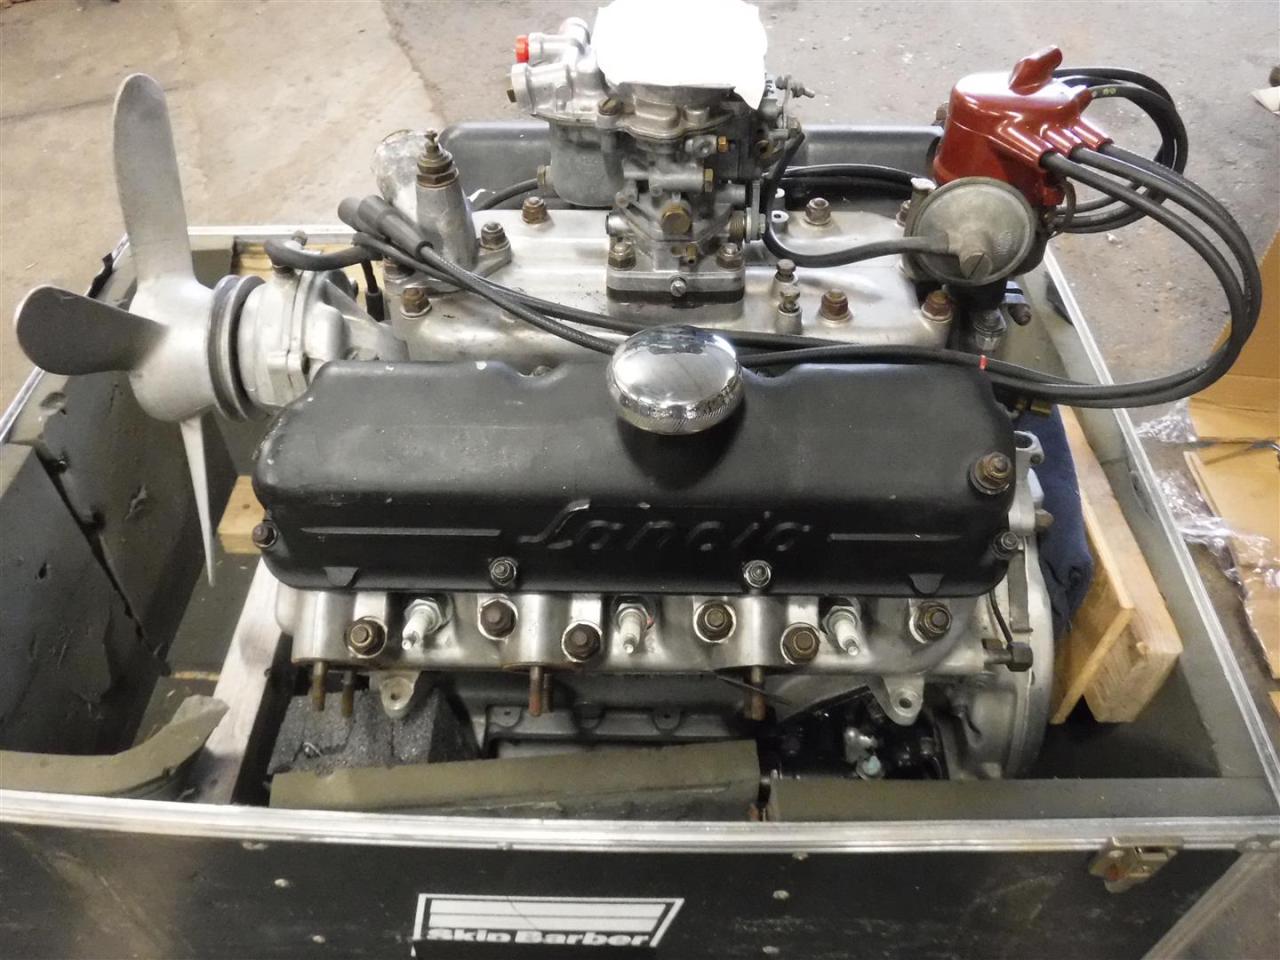 1960 Lancia Flaminia engine 813